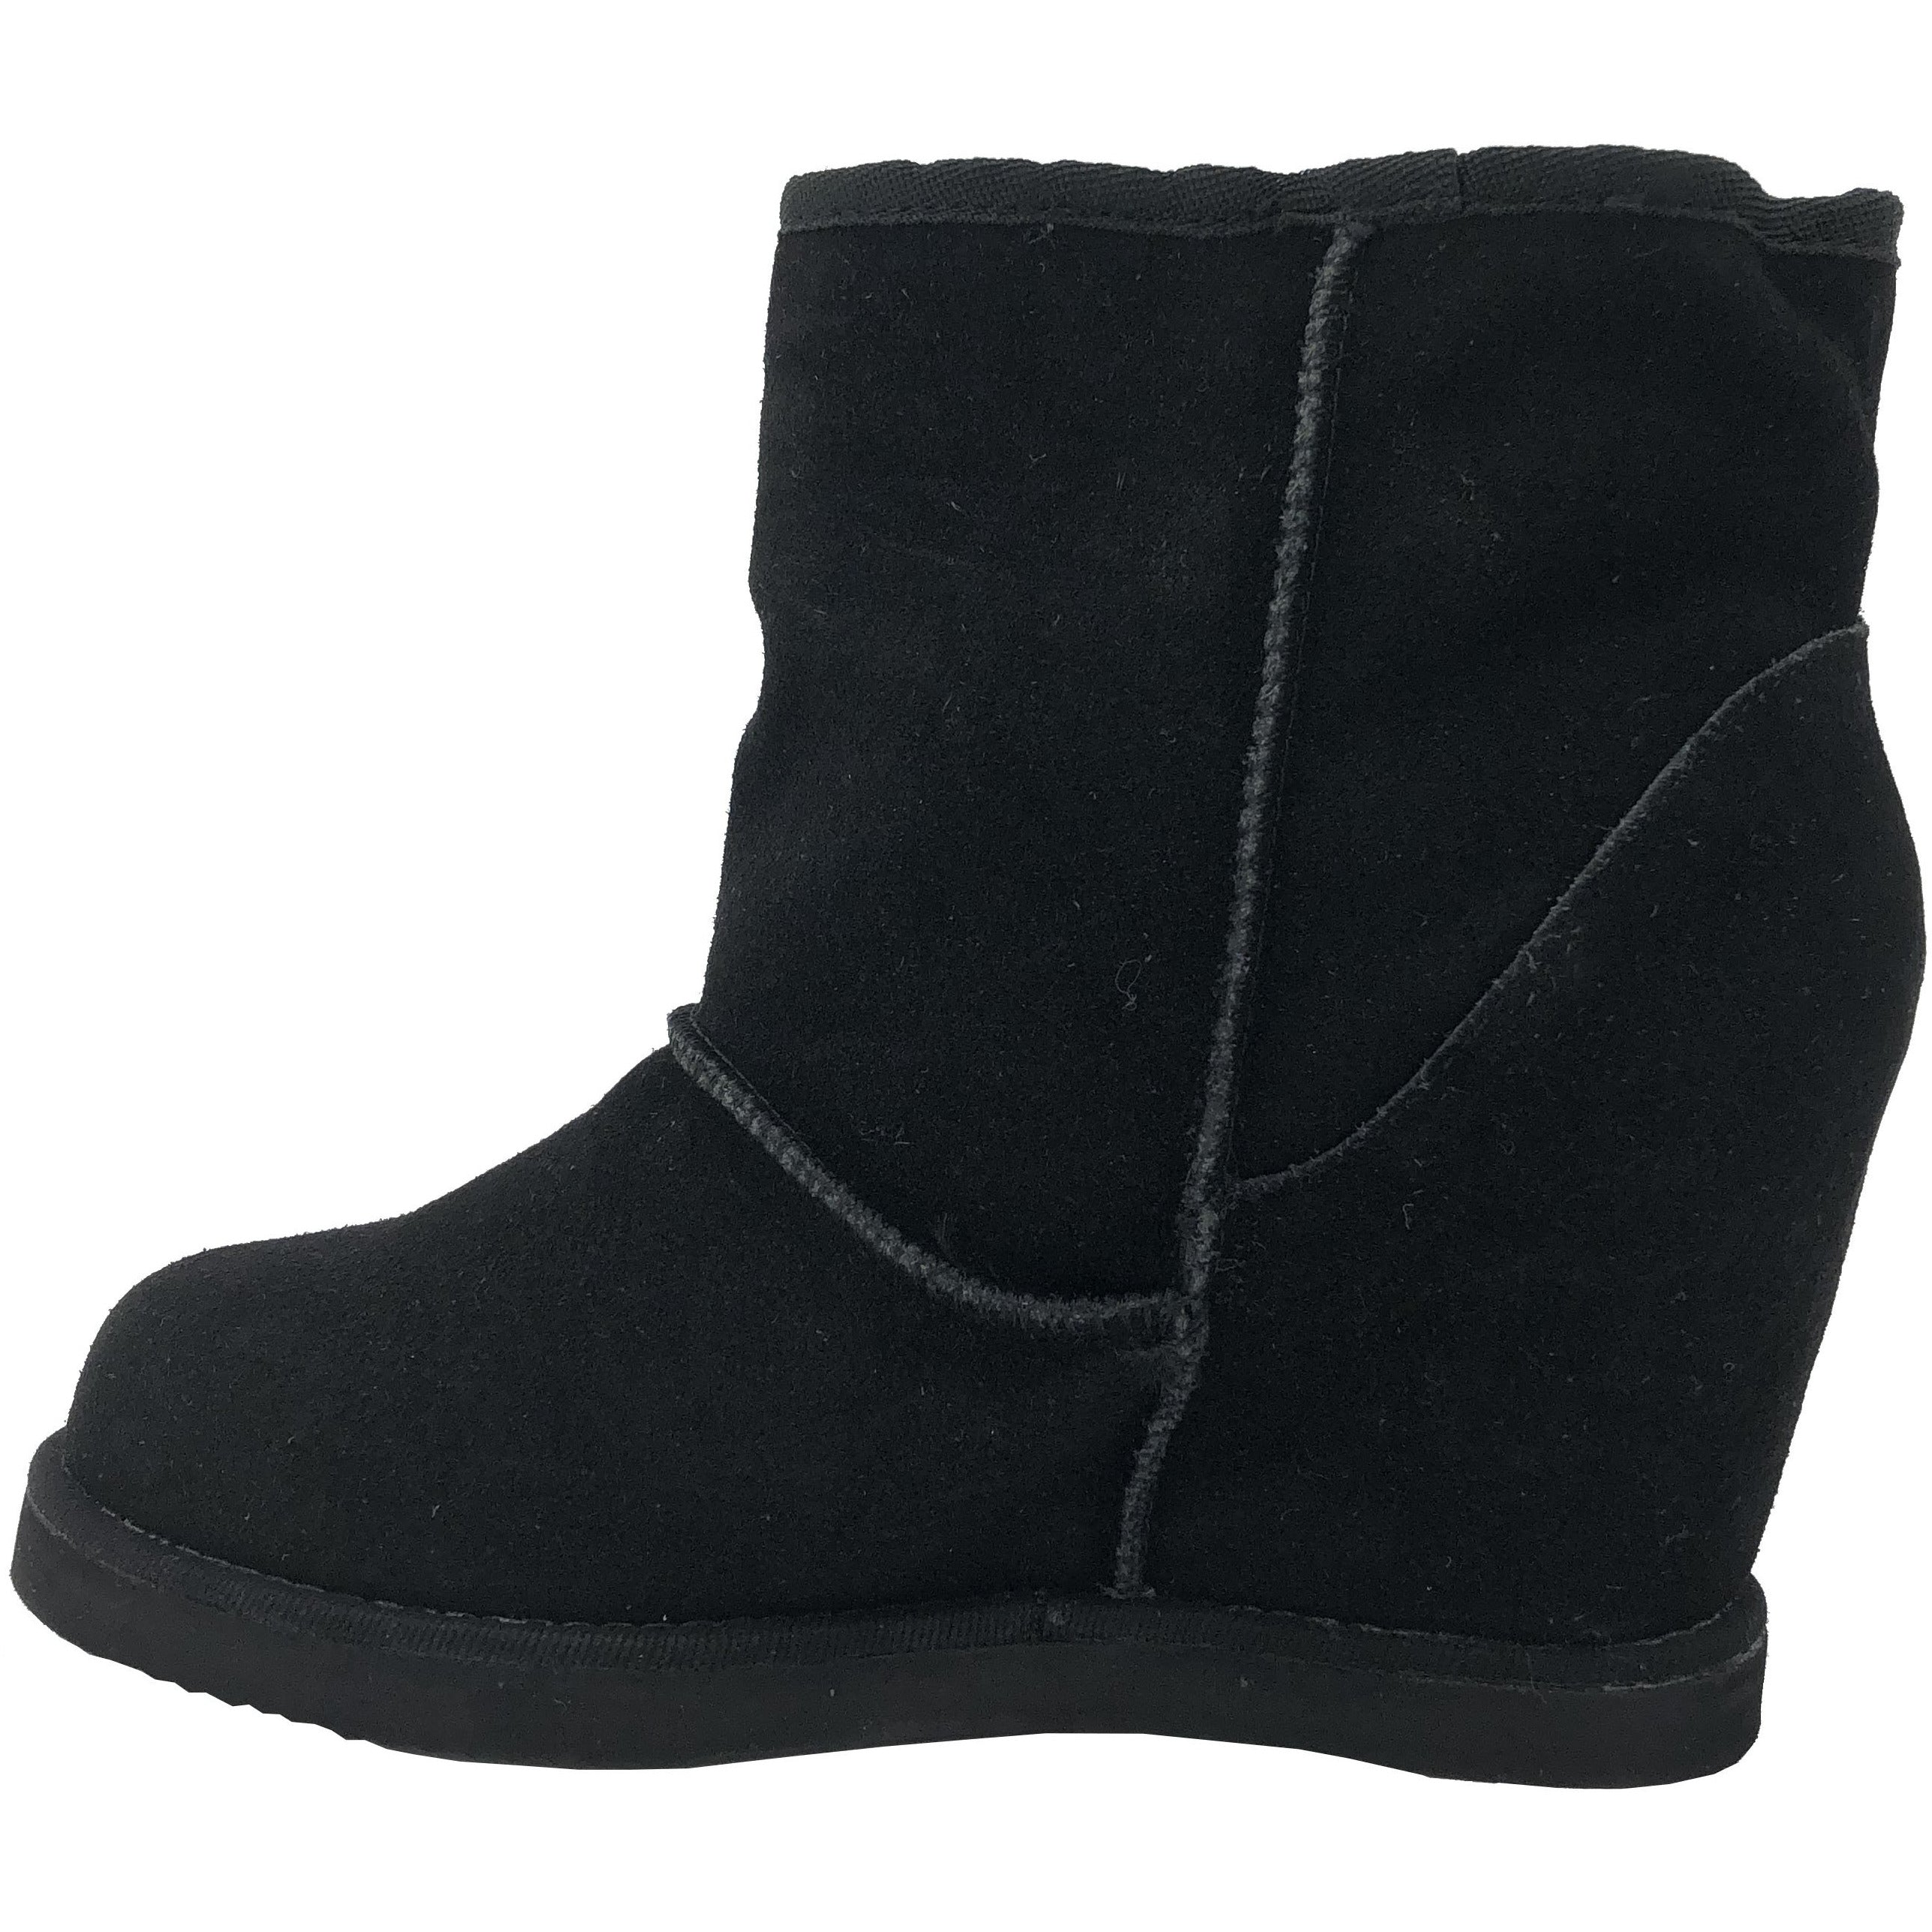 Zigi Women's Wedge Heeled Boot / Leather / Kick it Ups! / Black / Various Sizes